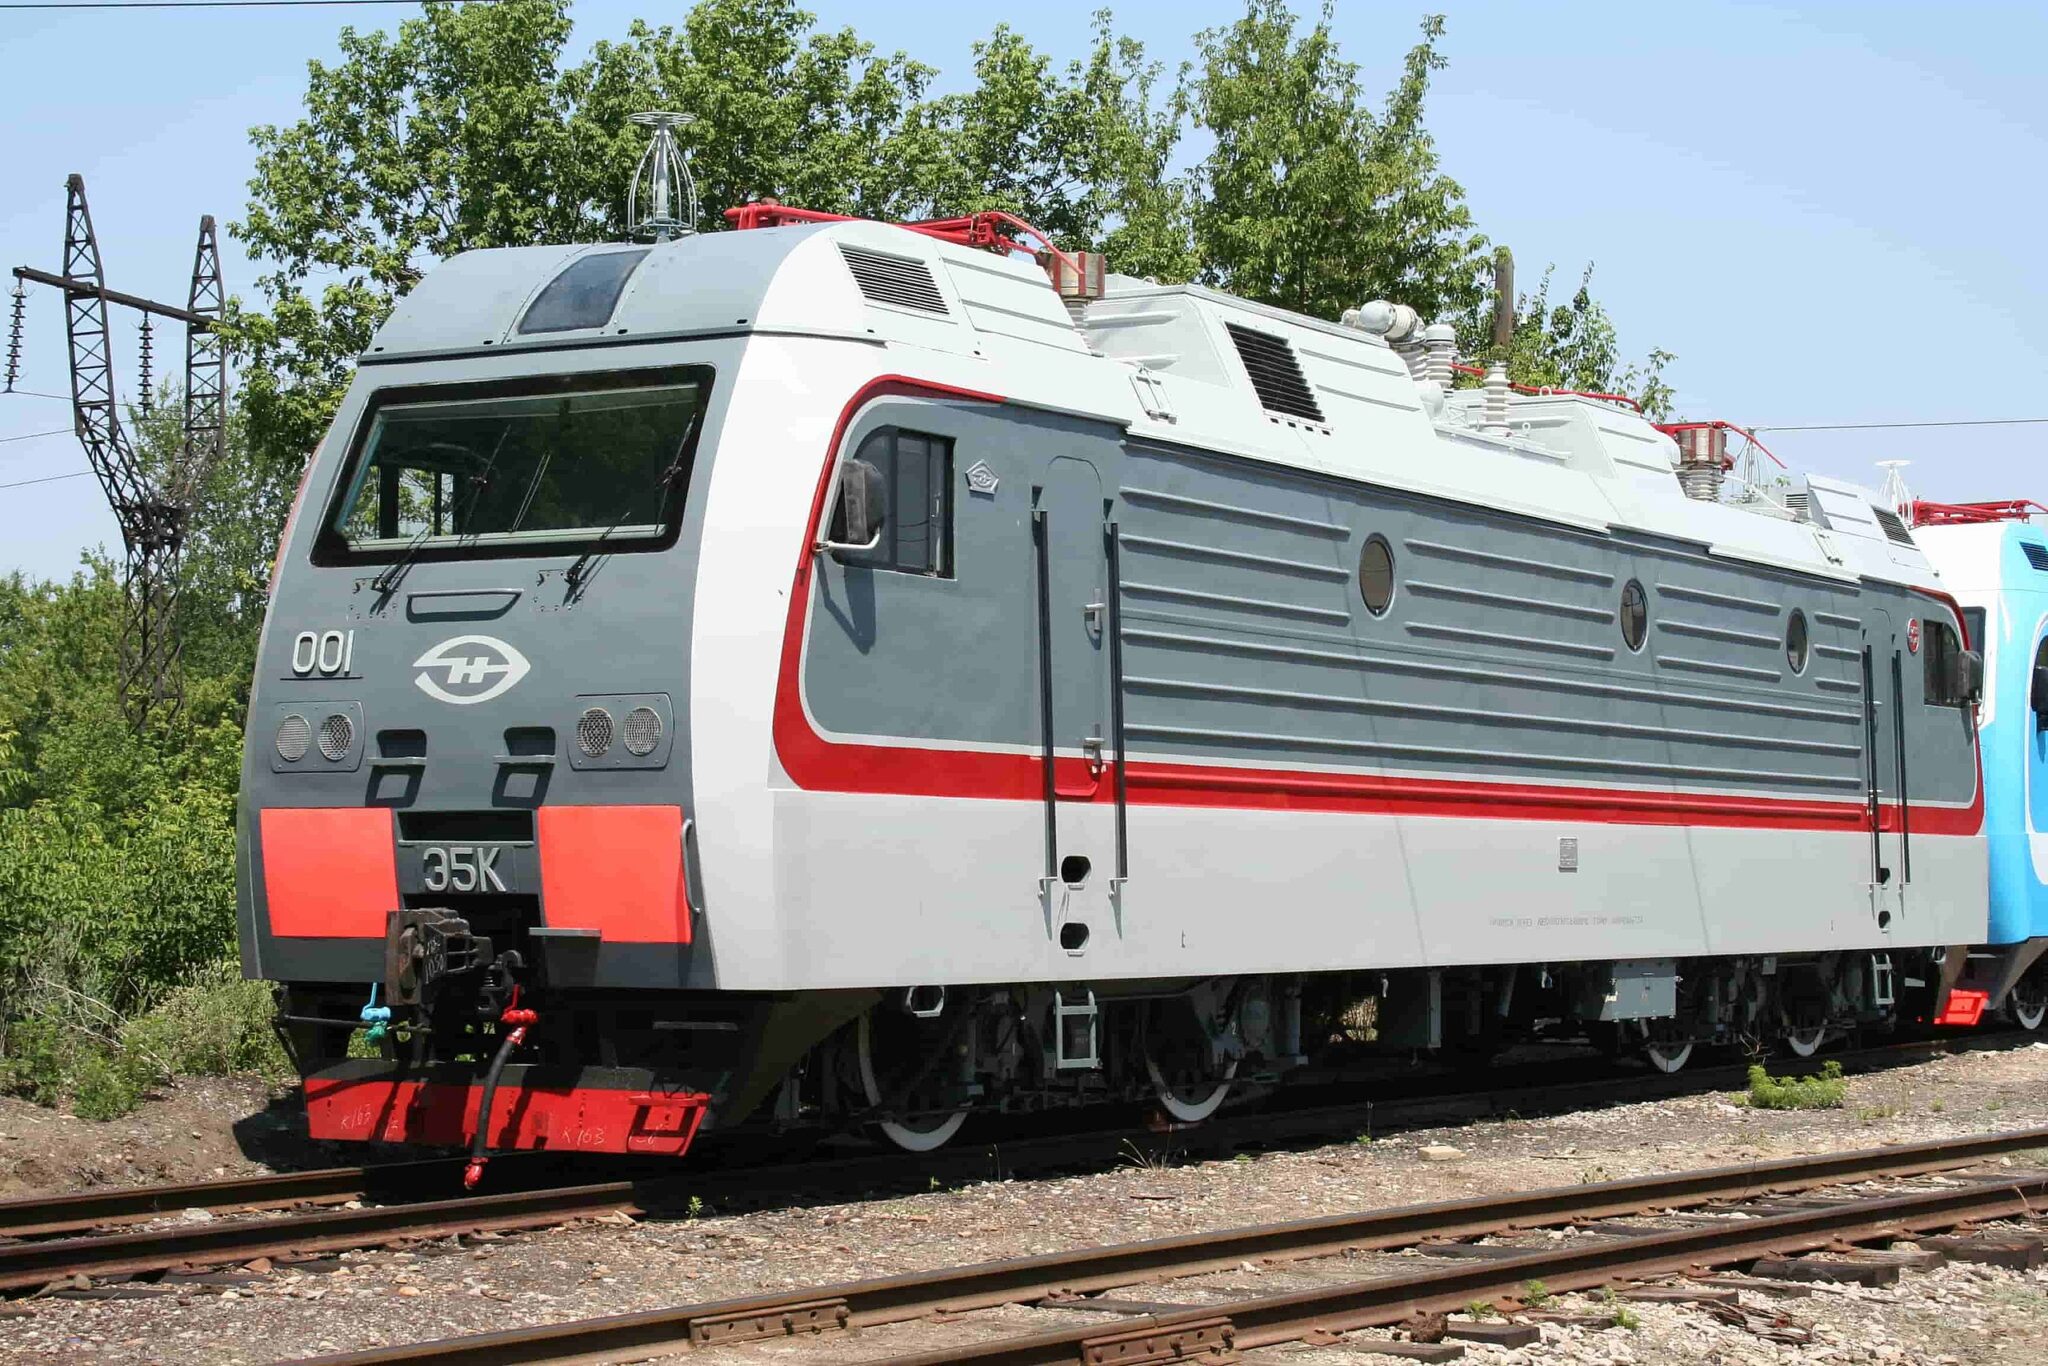 The first E5K mainline electric locomotive